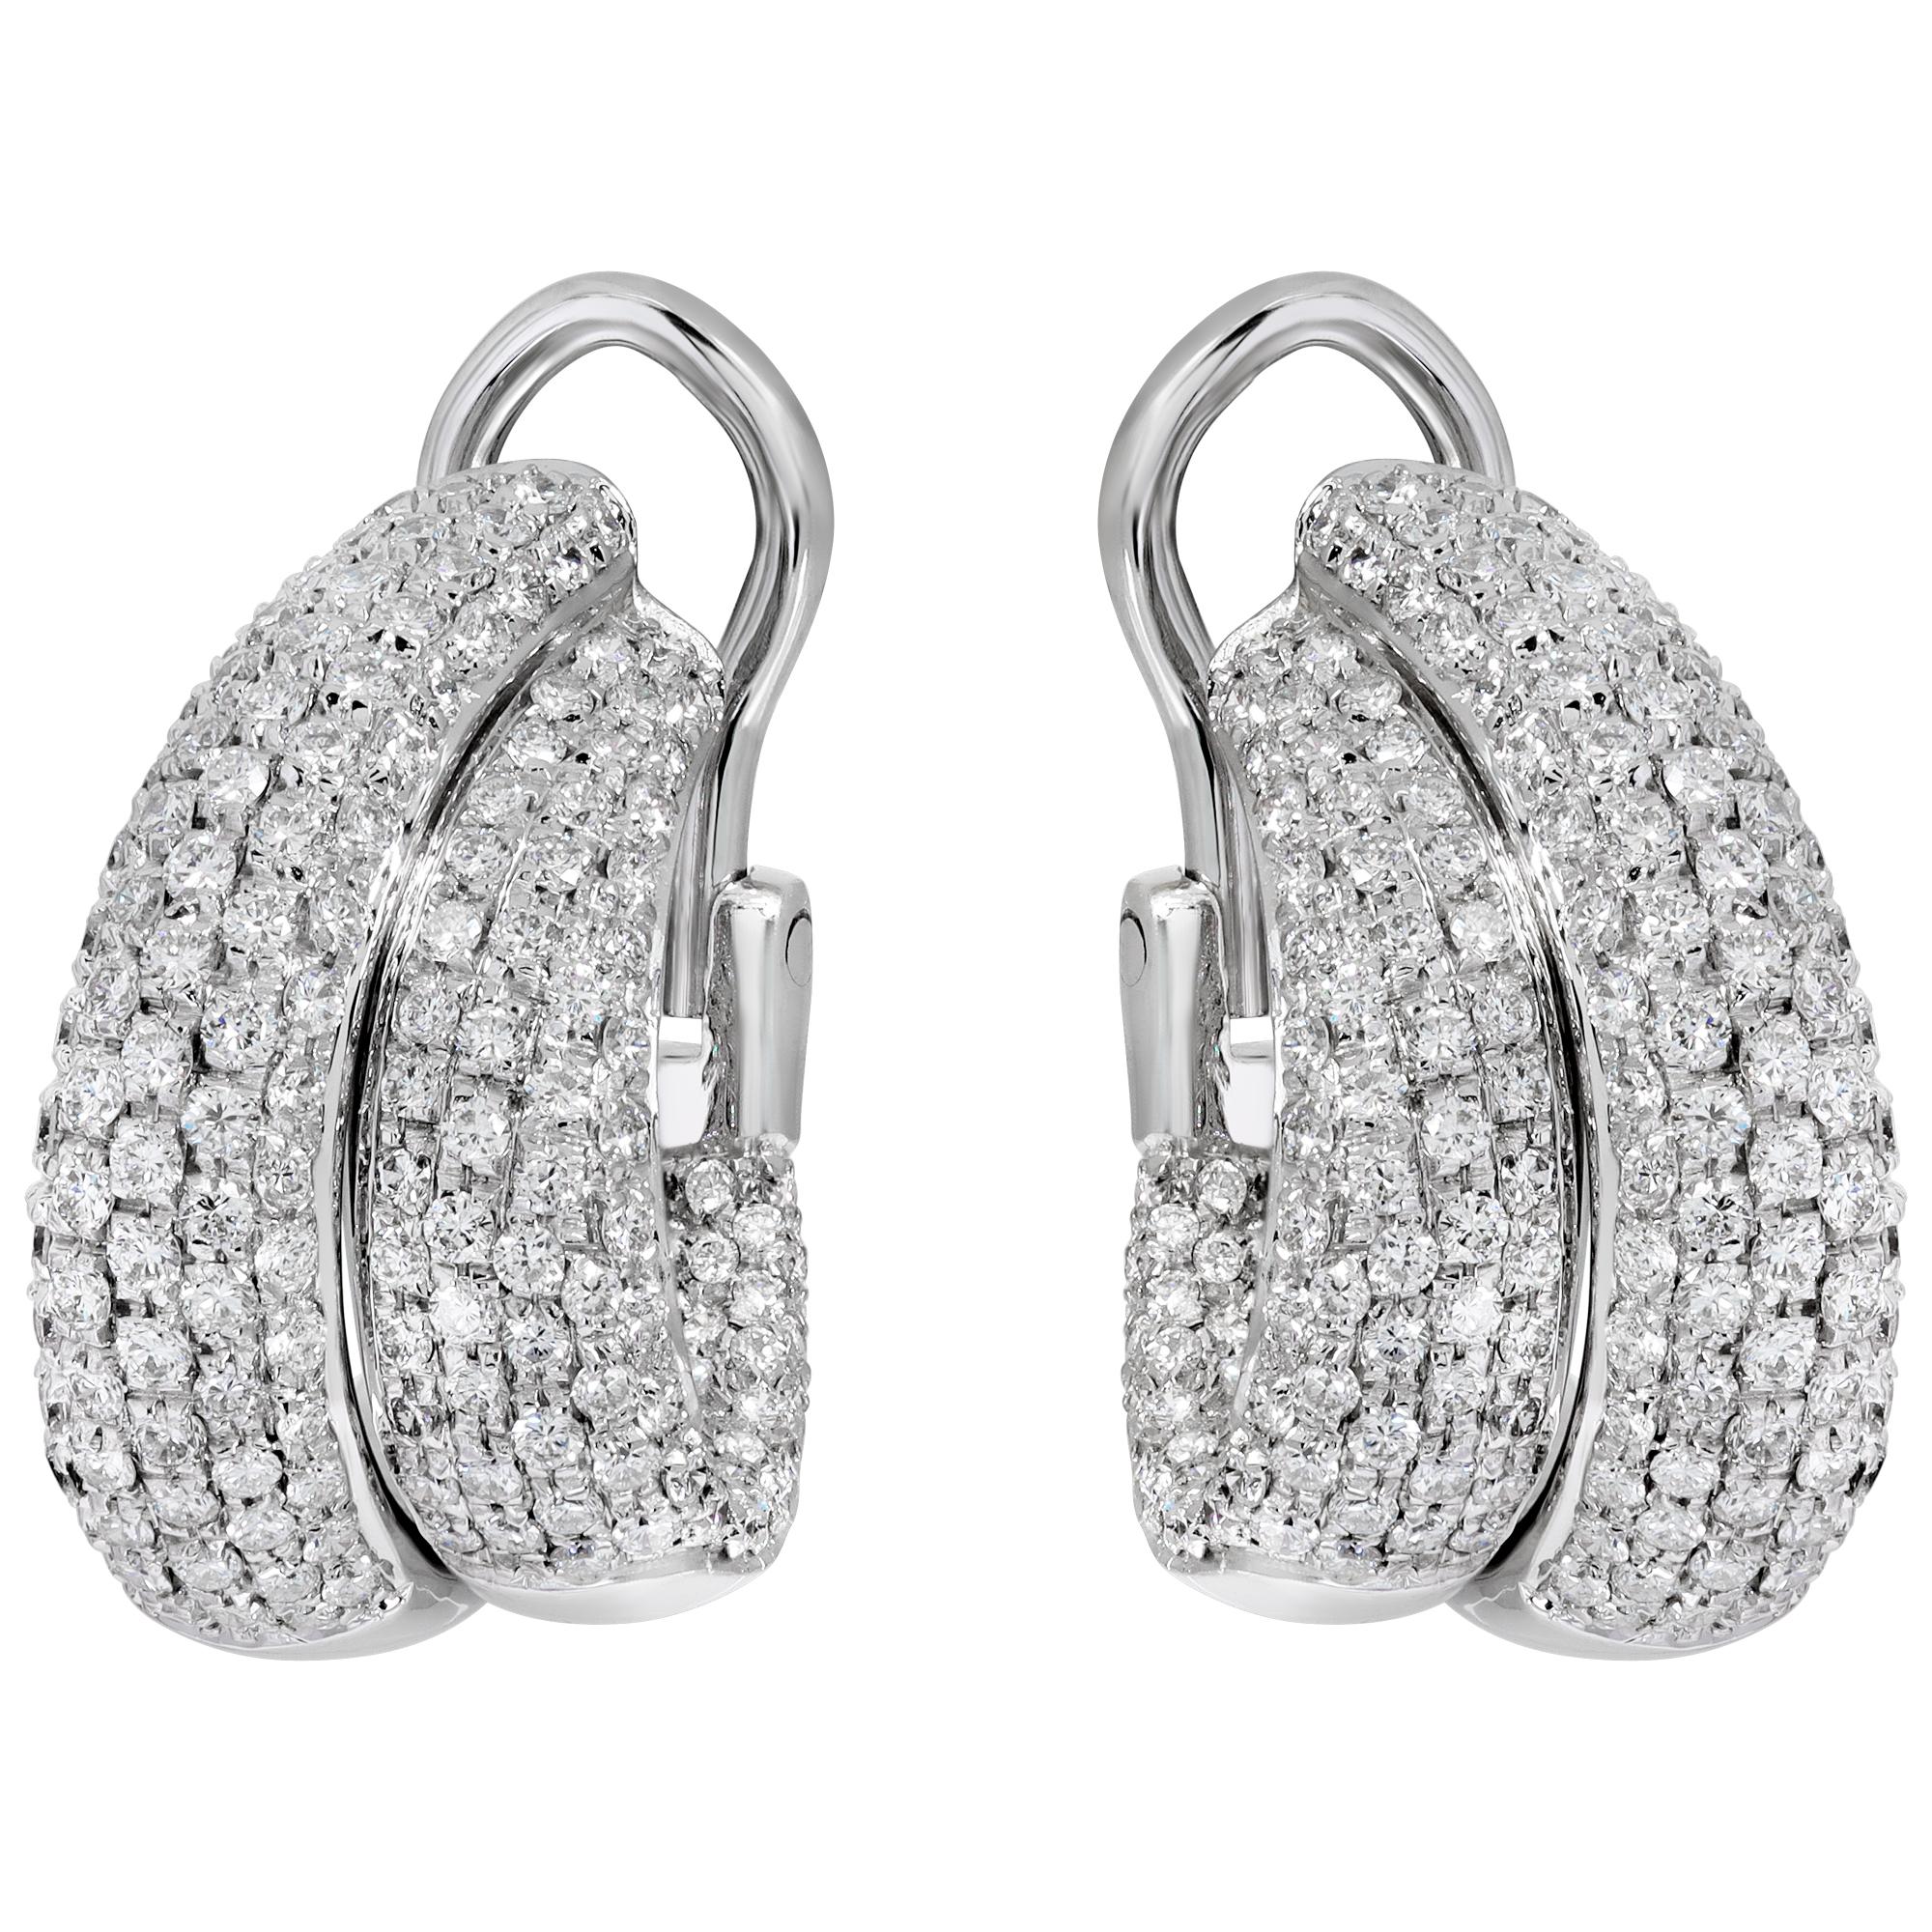 Double row of diamond 18K white gold hoop earrings